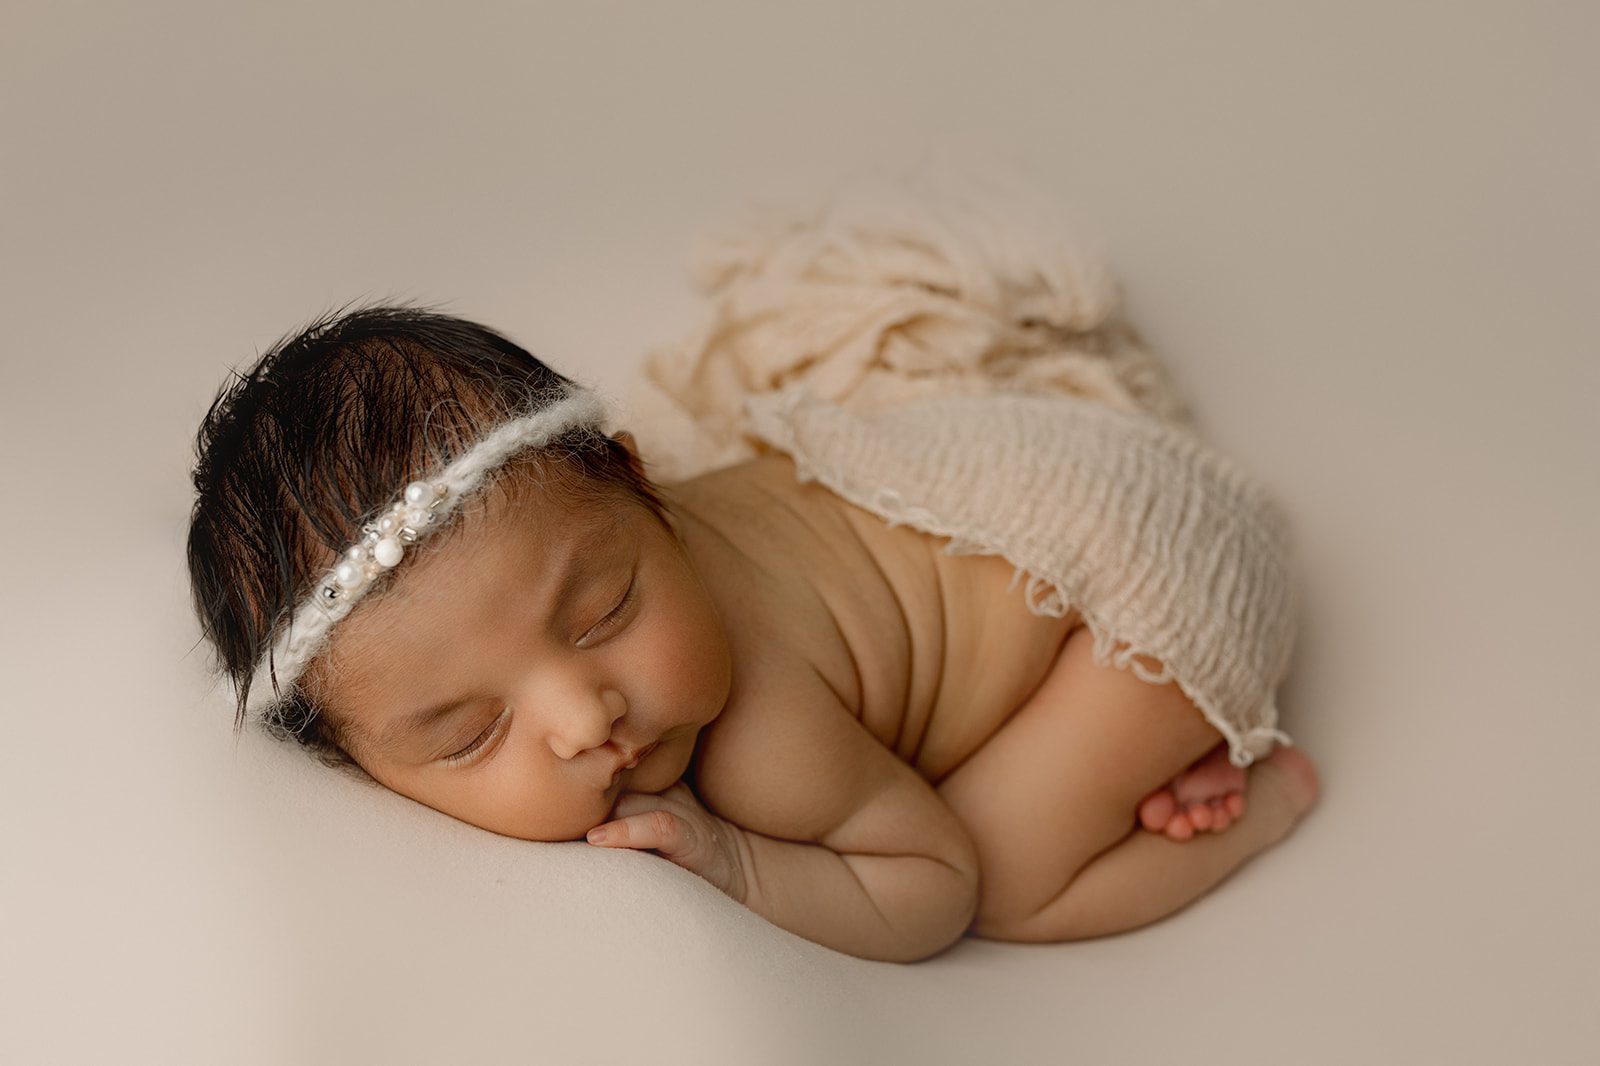 A newborn baby sleeps on its stomach under a beige blanket with a headband from Joyful Birth